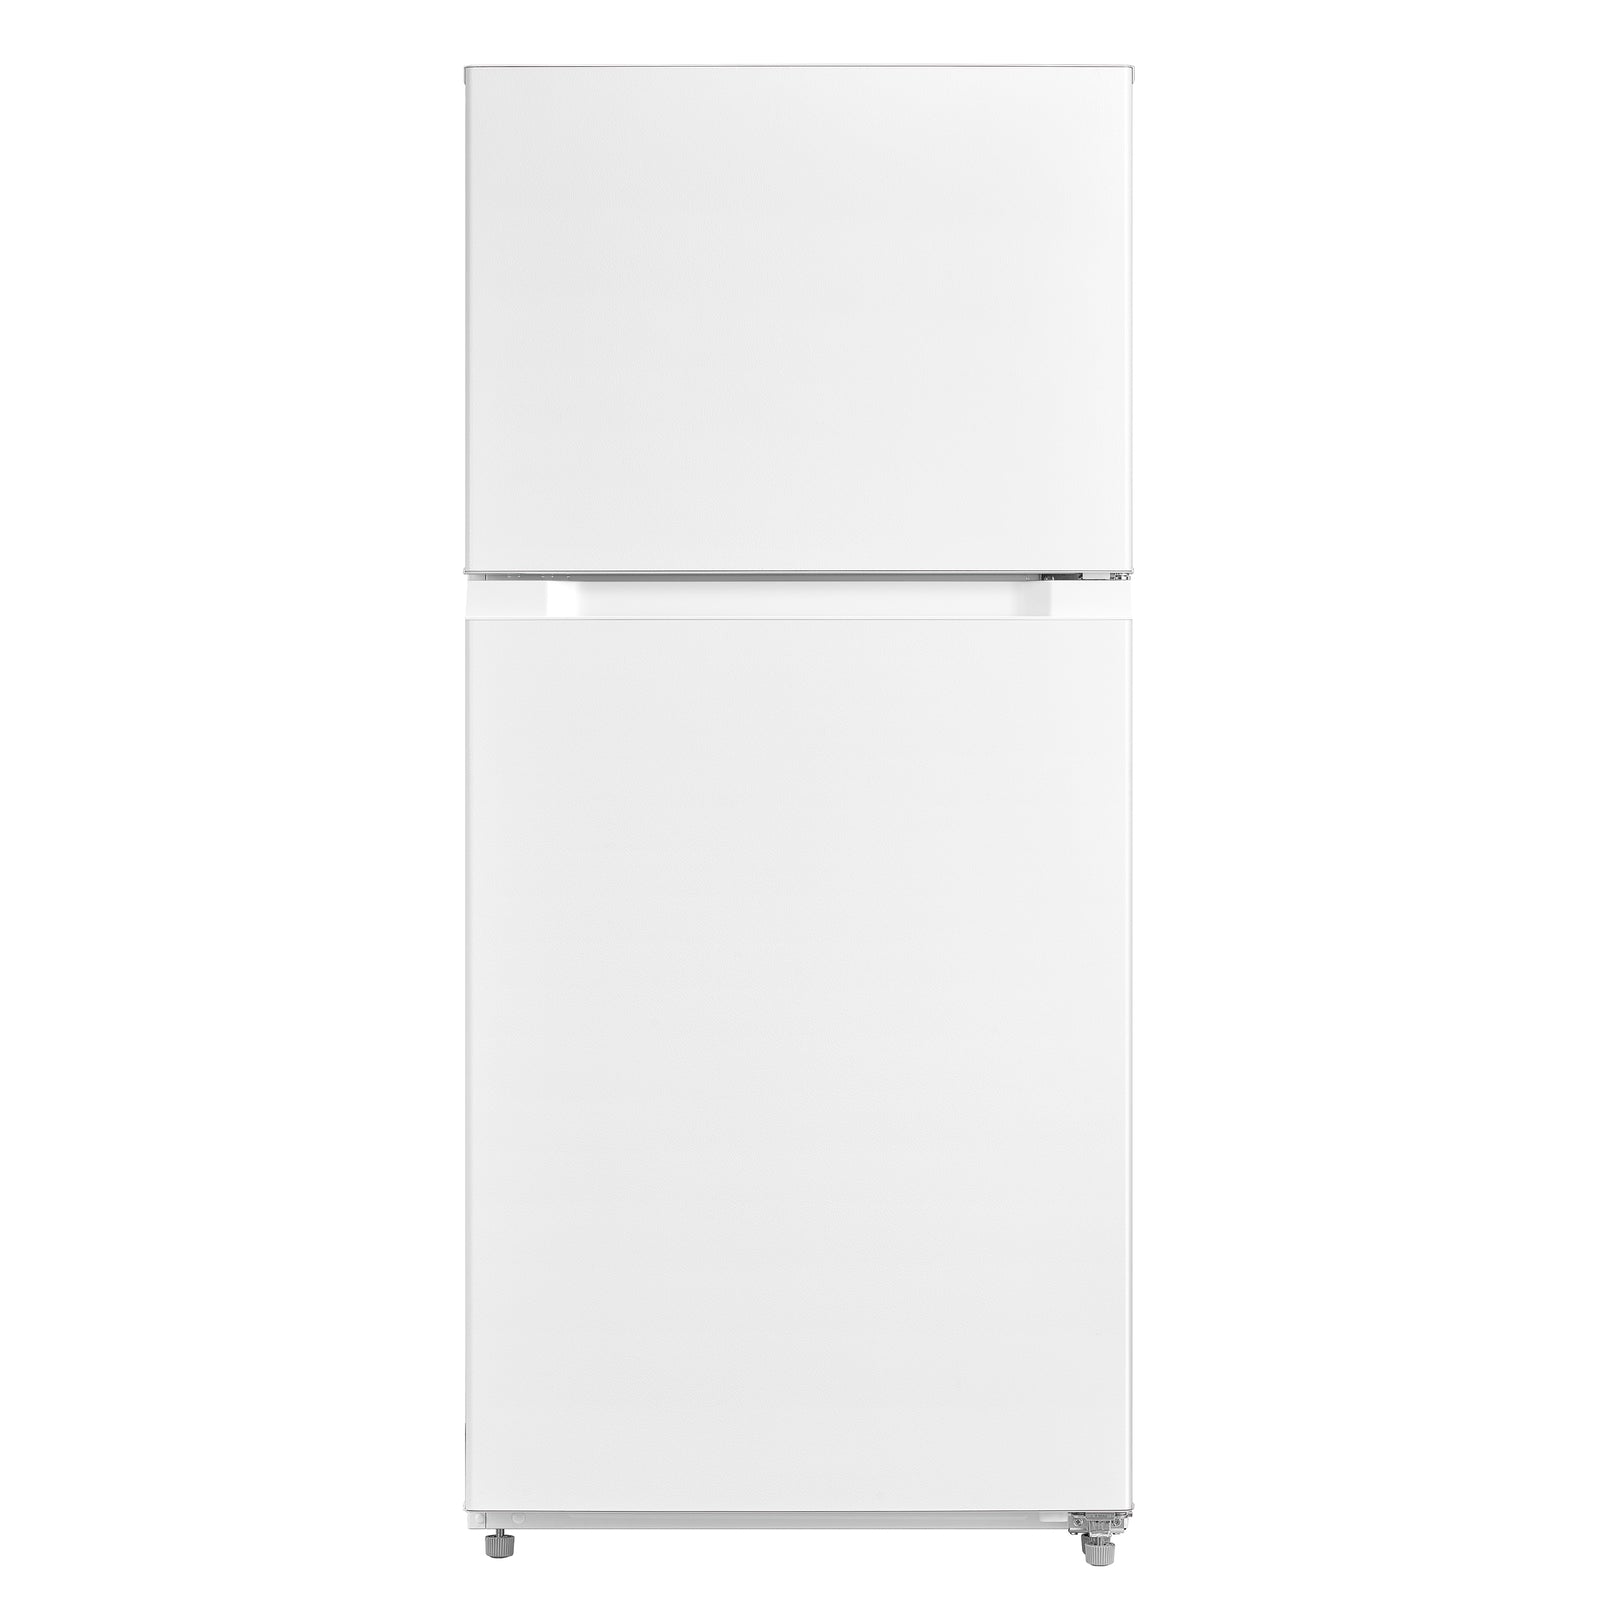 Avanti Frost Free Top Freezer Refrigerator - Stainless Steel / 14.2 cu. ft.